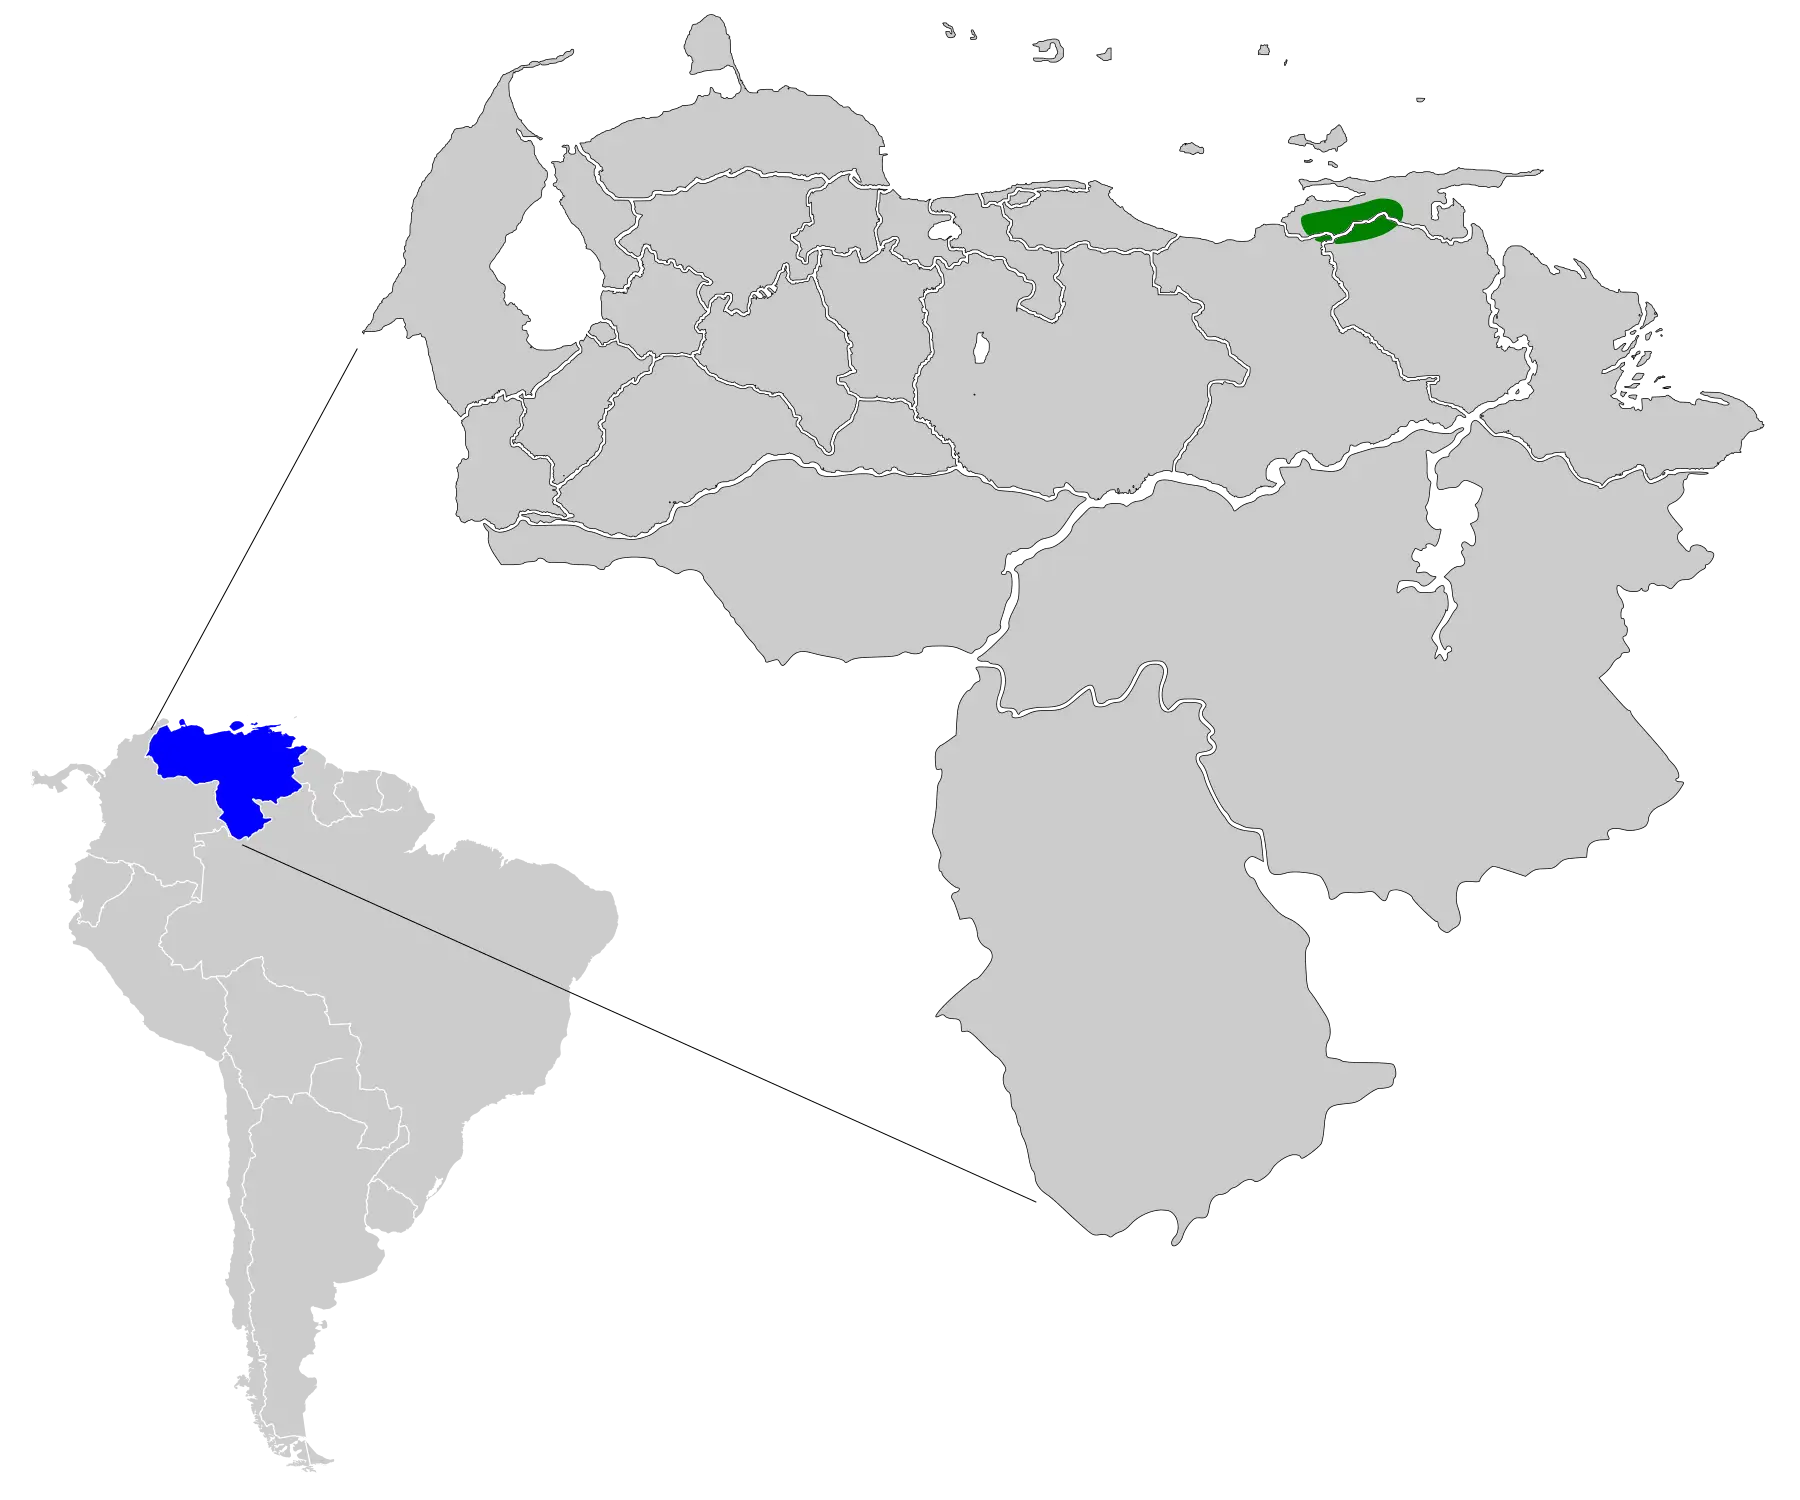 Venezuelan sylph habitat map